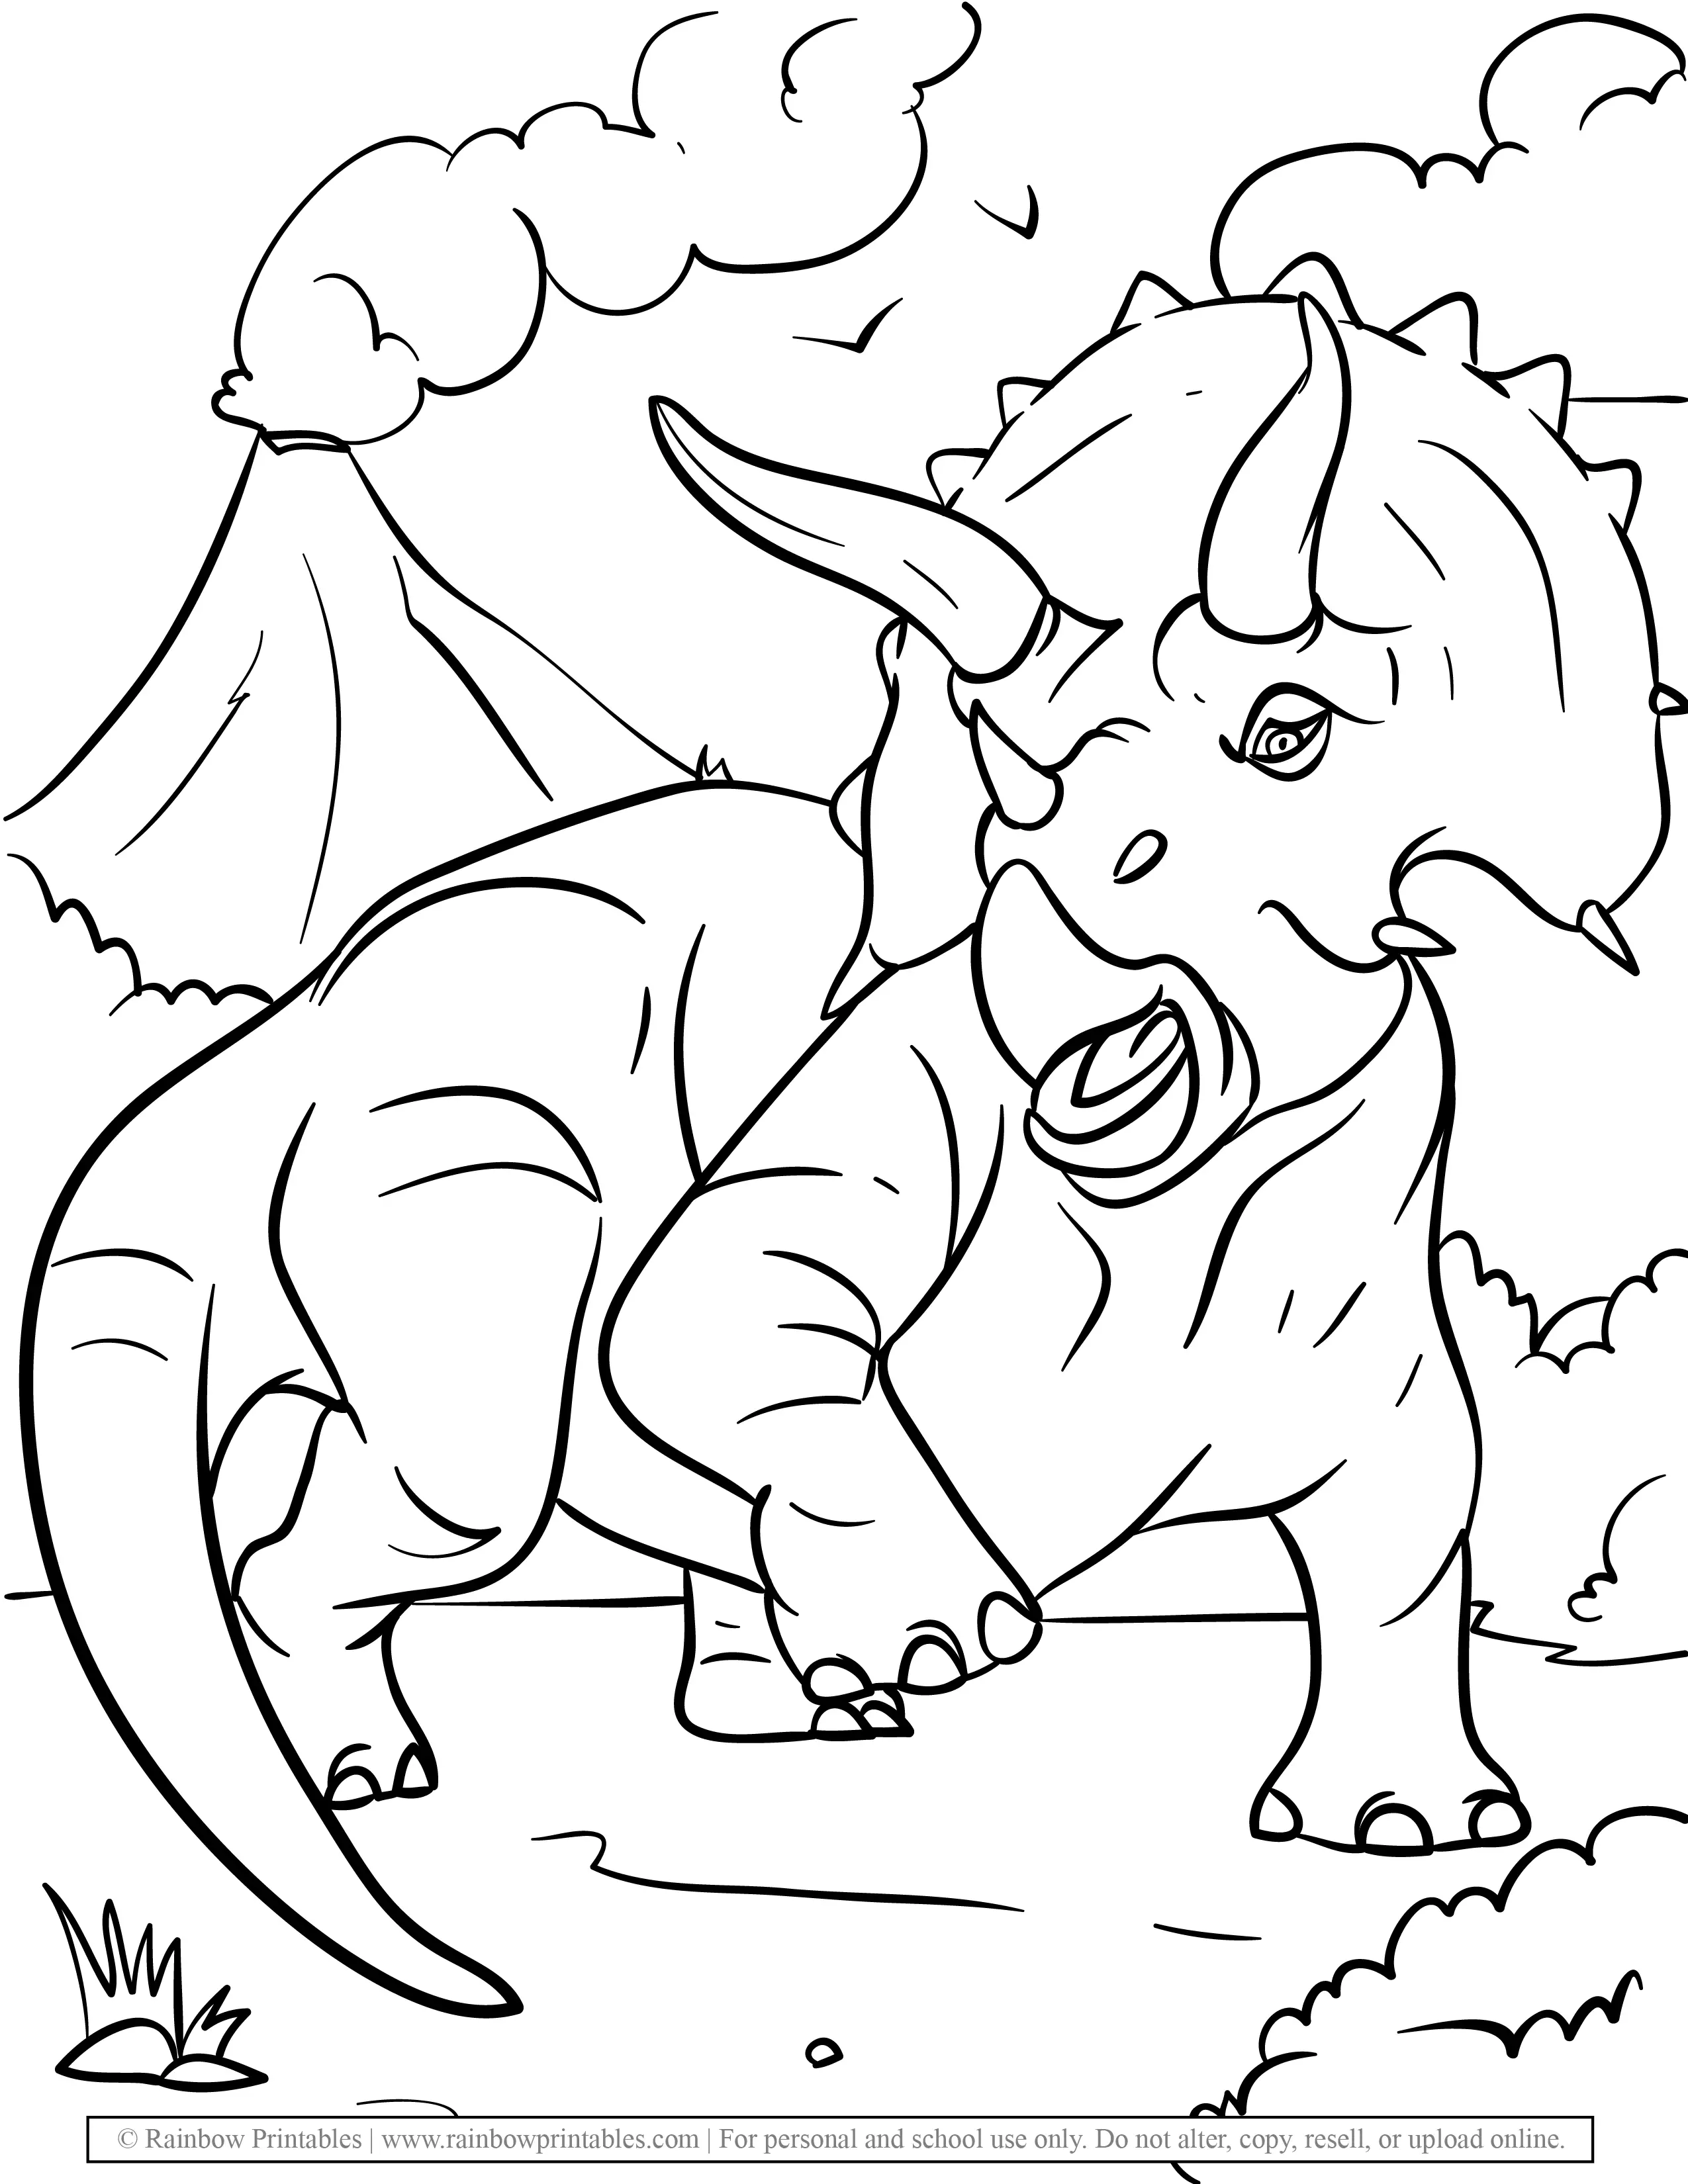 Animals Ceratopsian Dinosaur Smoking Volcano Landscape Extinct Animals Coloring Page for Kids